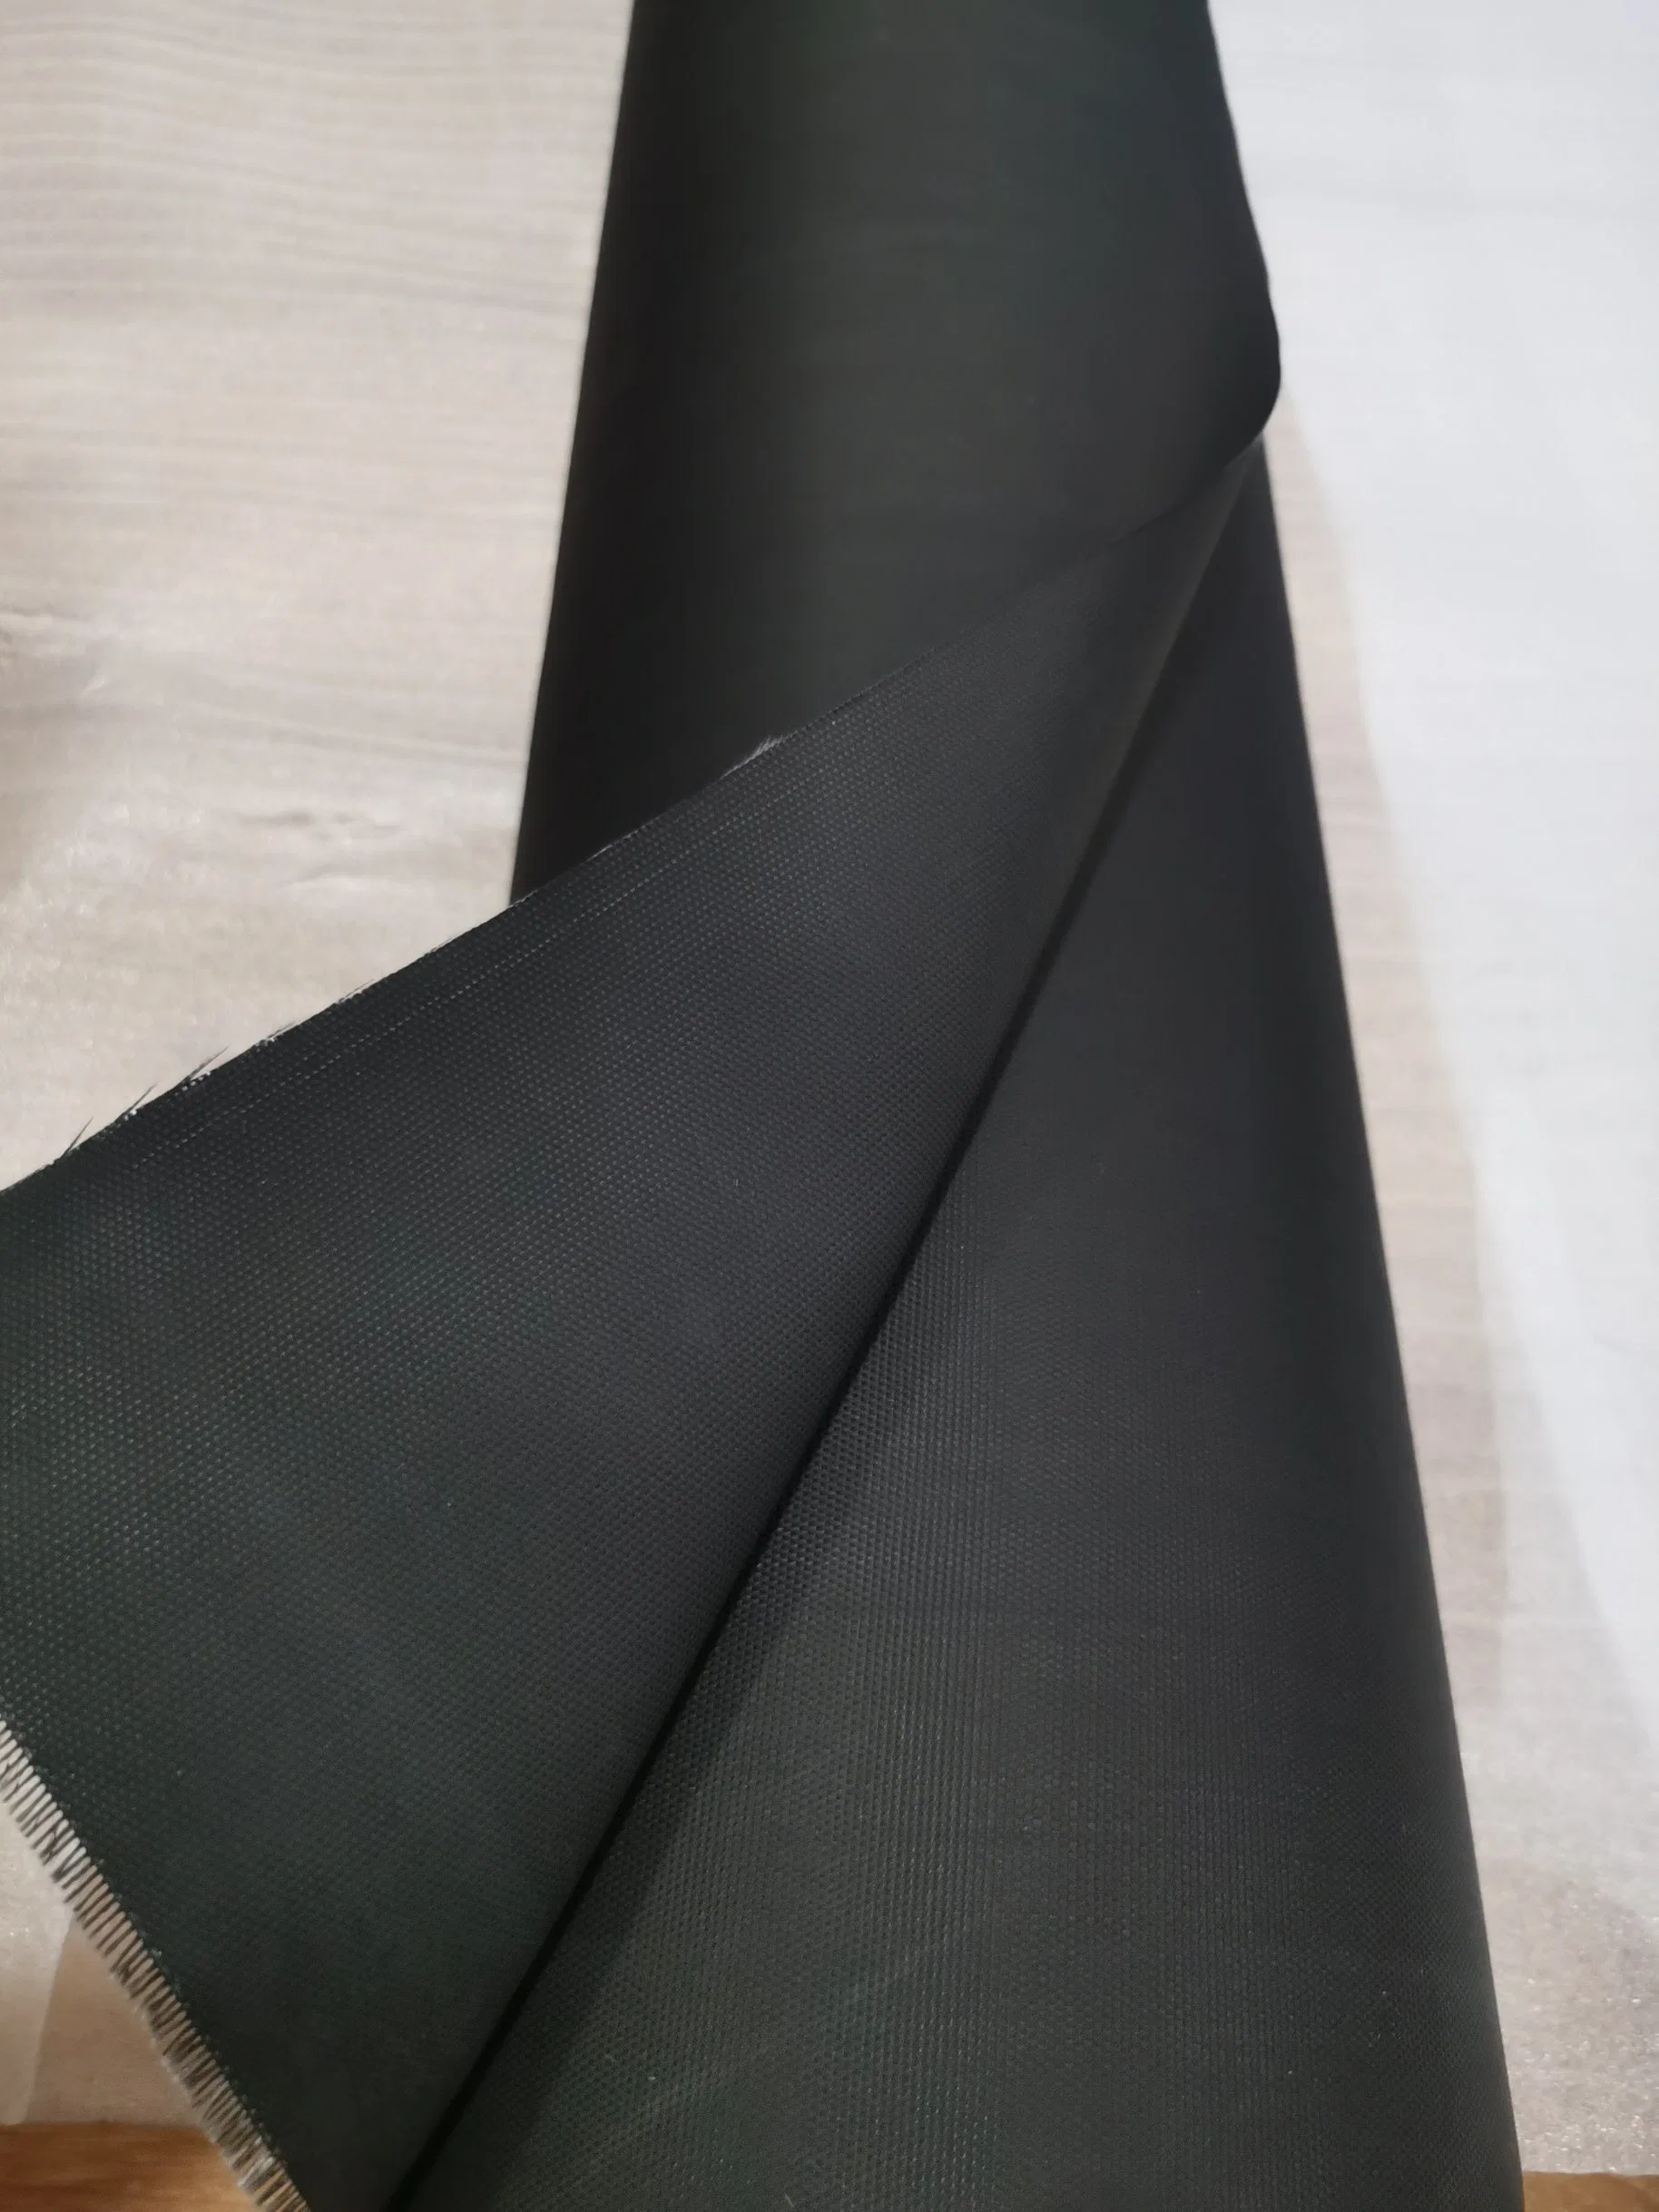 E-Glass Black Fiberglass Fabric for Glass Wool Surfacing Wgf